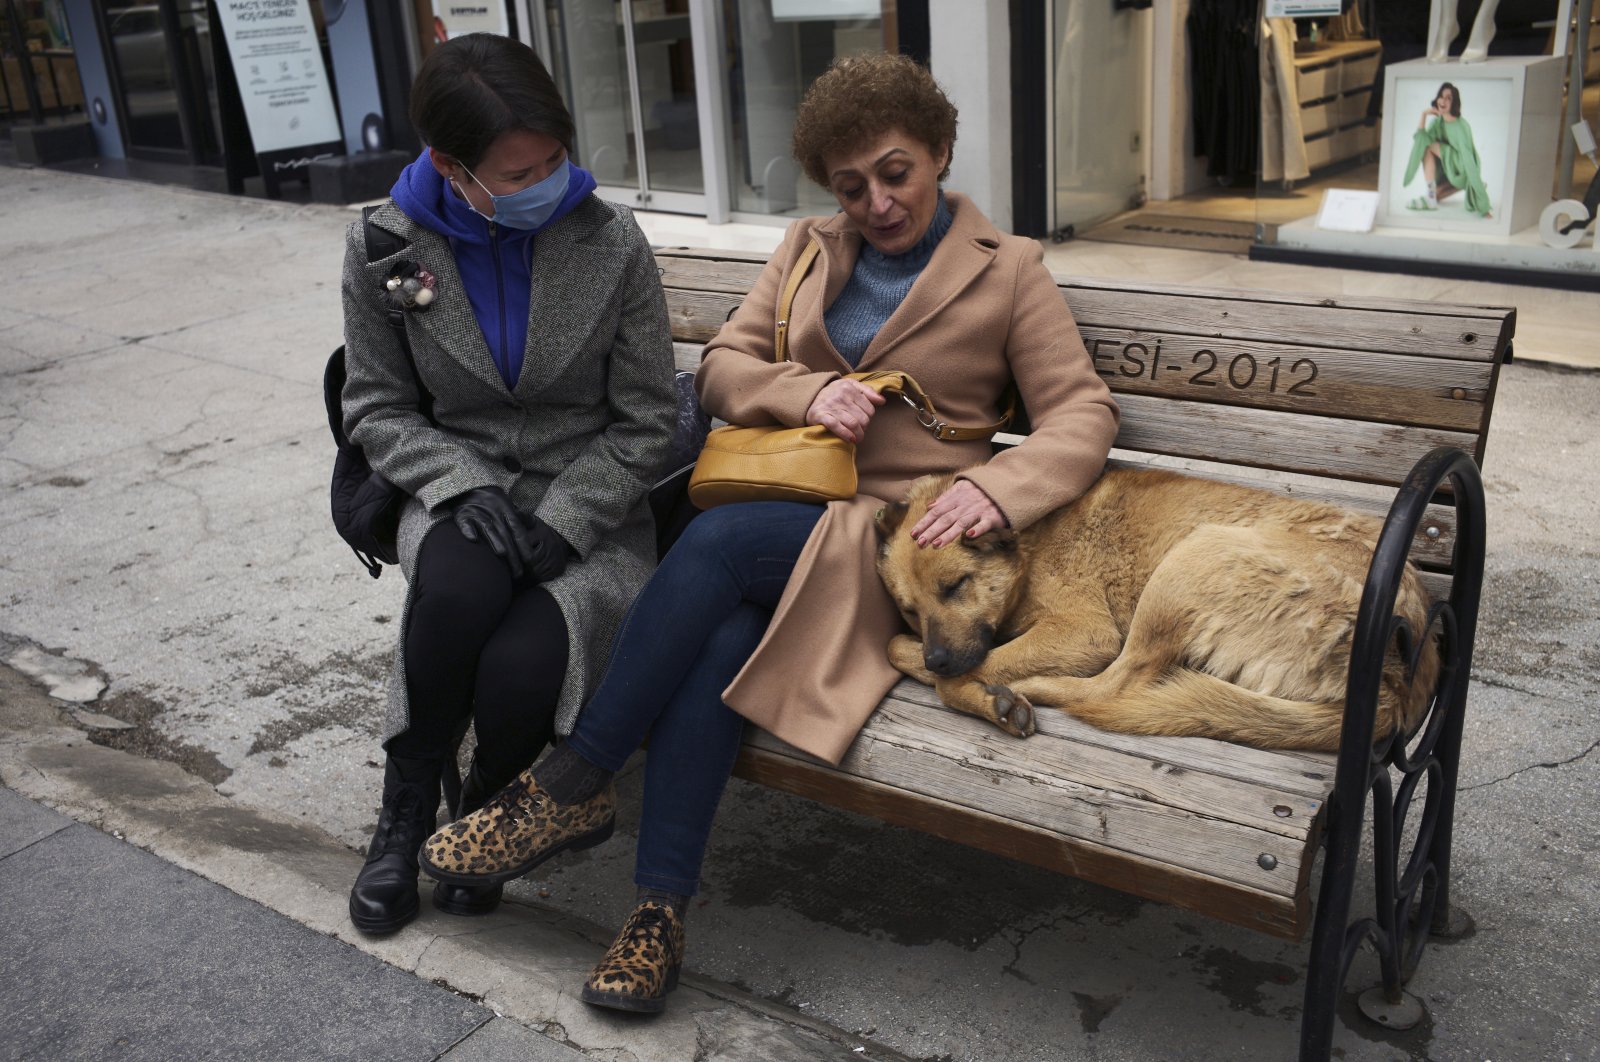 Women chat while sitting next to a stray dog, in Ankara, Türkiye, March 2, 2022. (AP Photo)